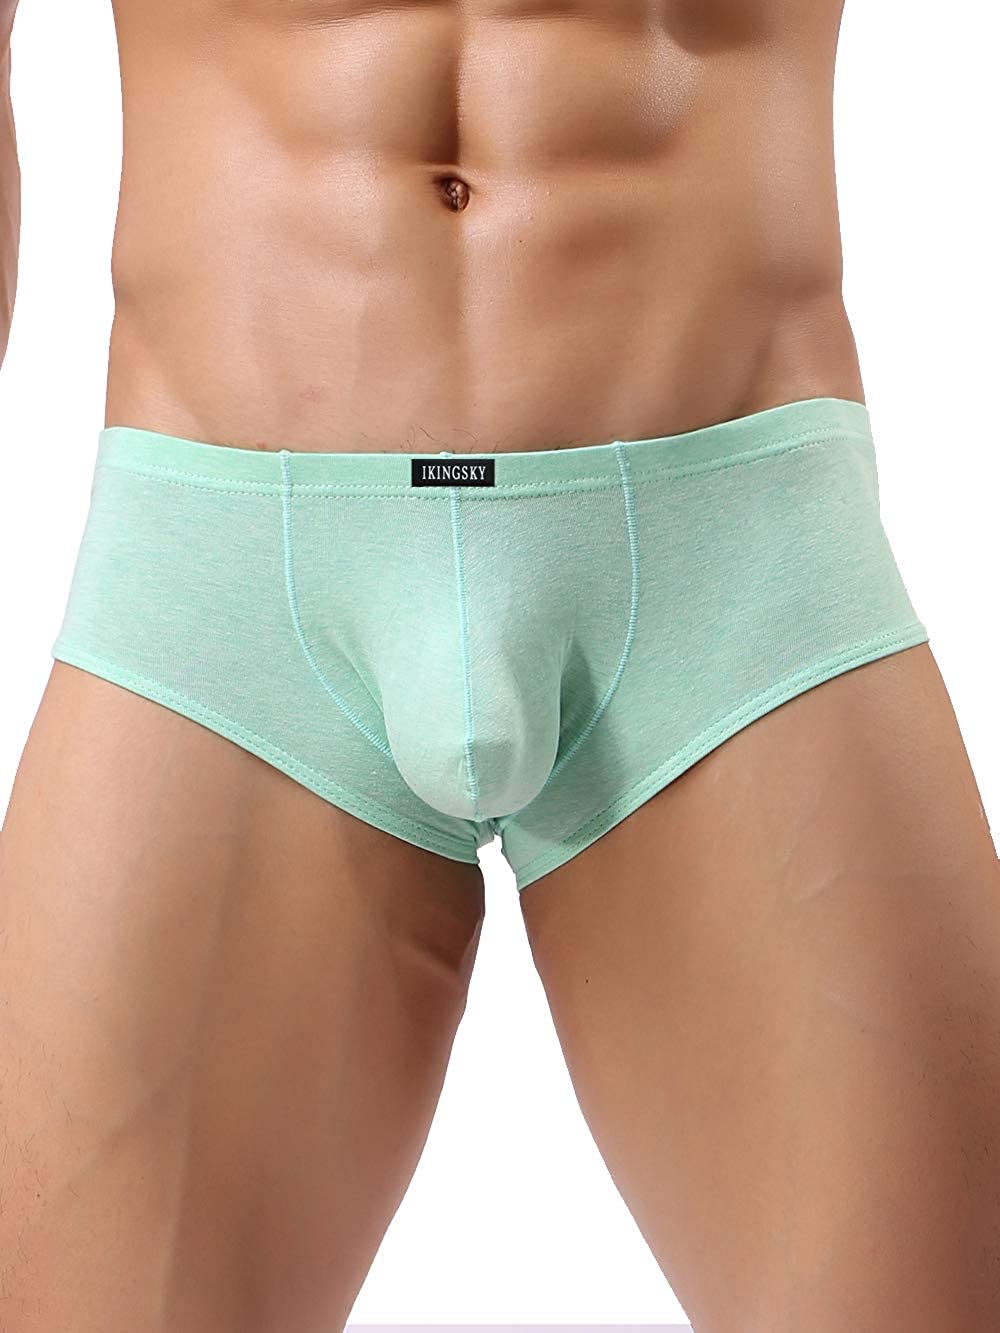 Ikingsky Mens Cotton Boxer Briefs Underwear Sexy Low Rise Men Pouch